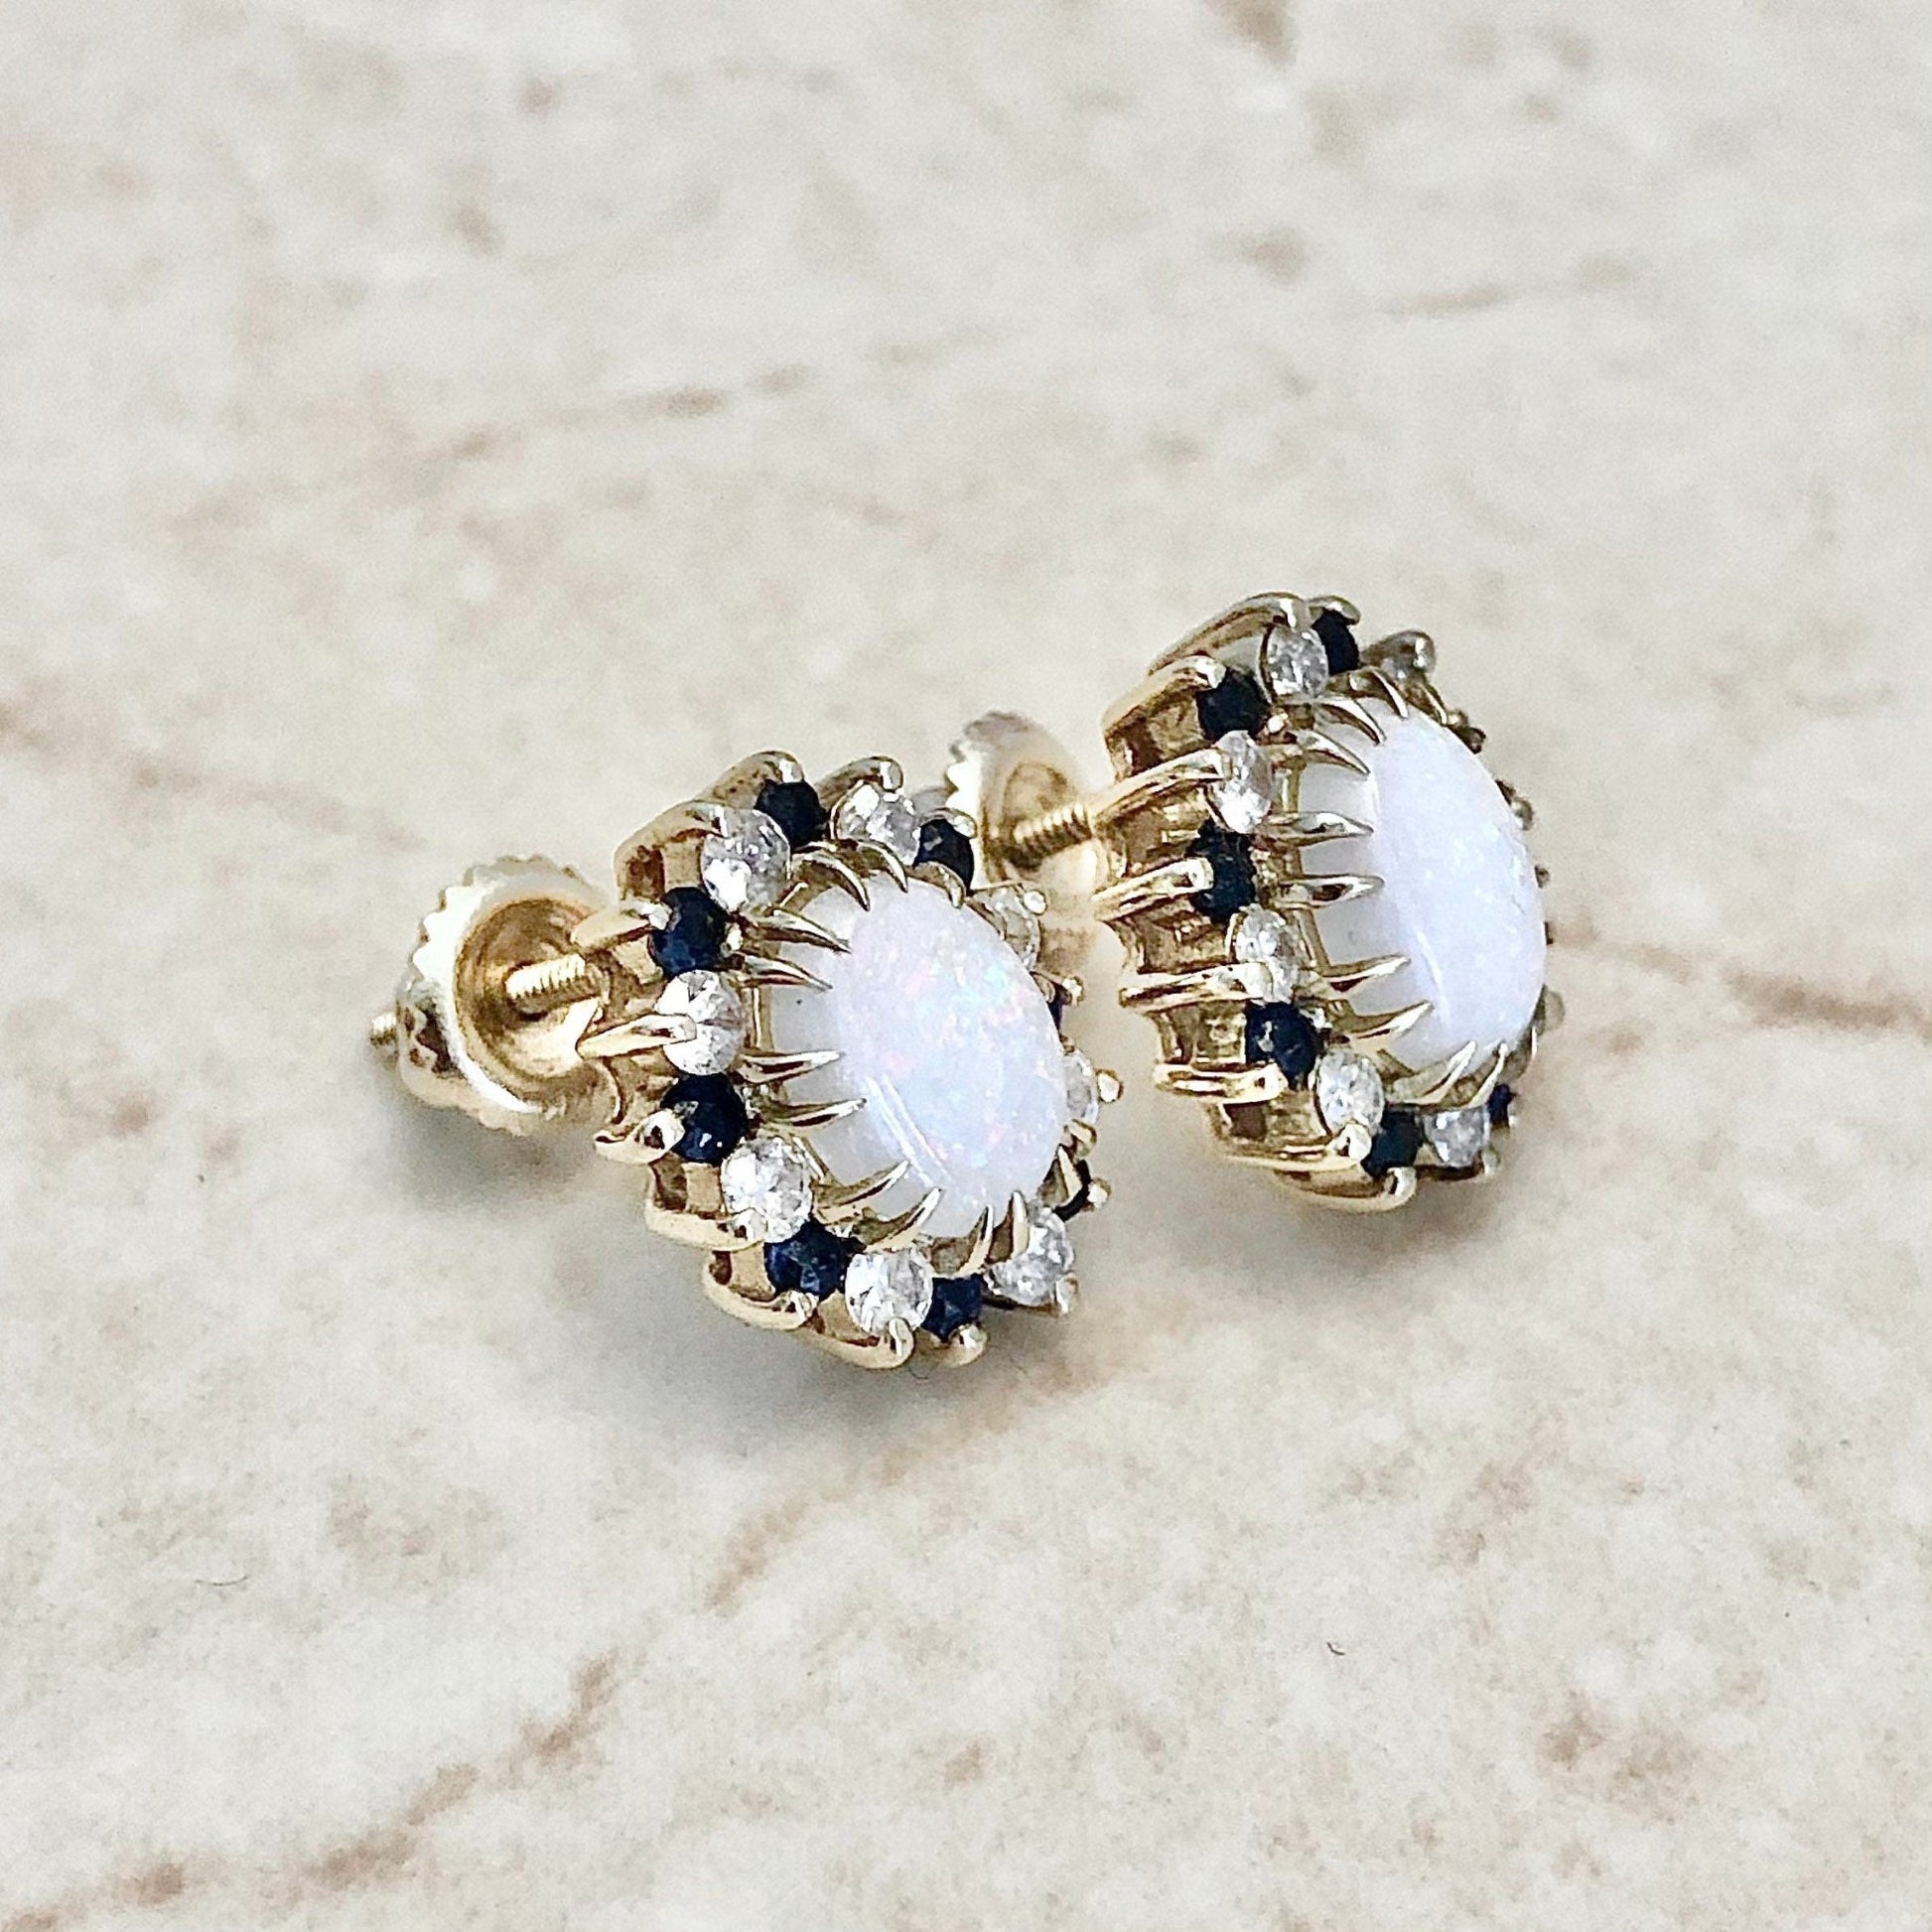 Vintage Opal Sapphire & Diamond Stud Earrings - Handcrafted 14K Yellow Gold - April September October Birthstone Earrings - Birthday Gift